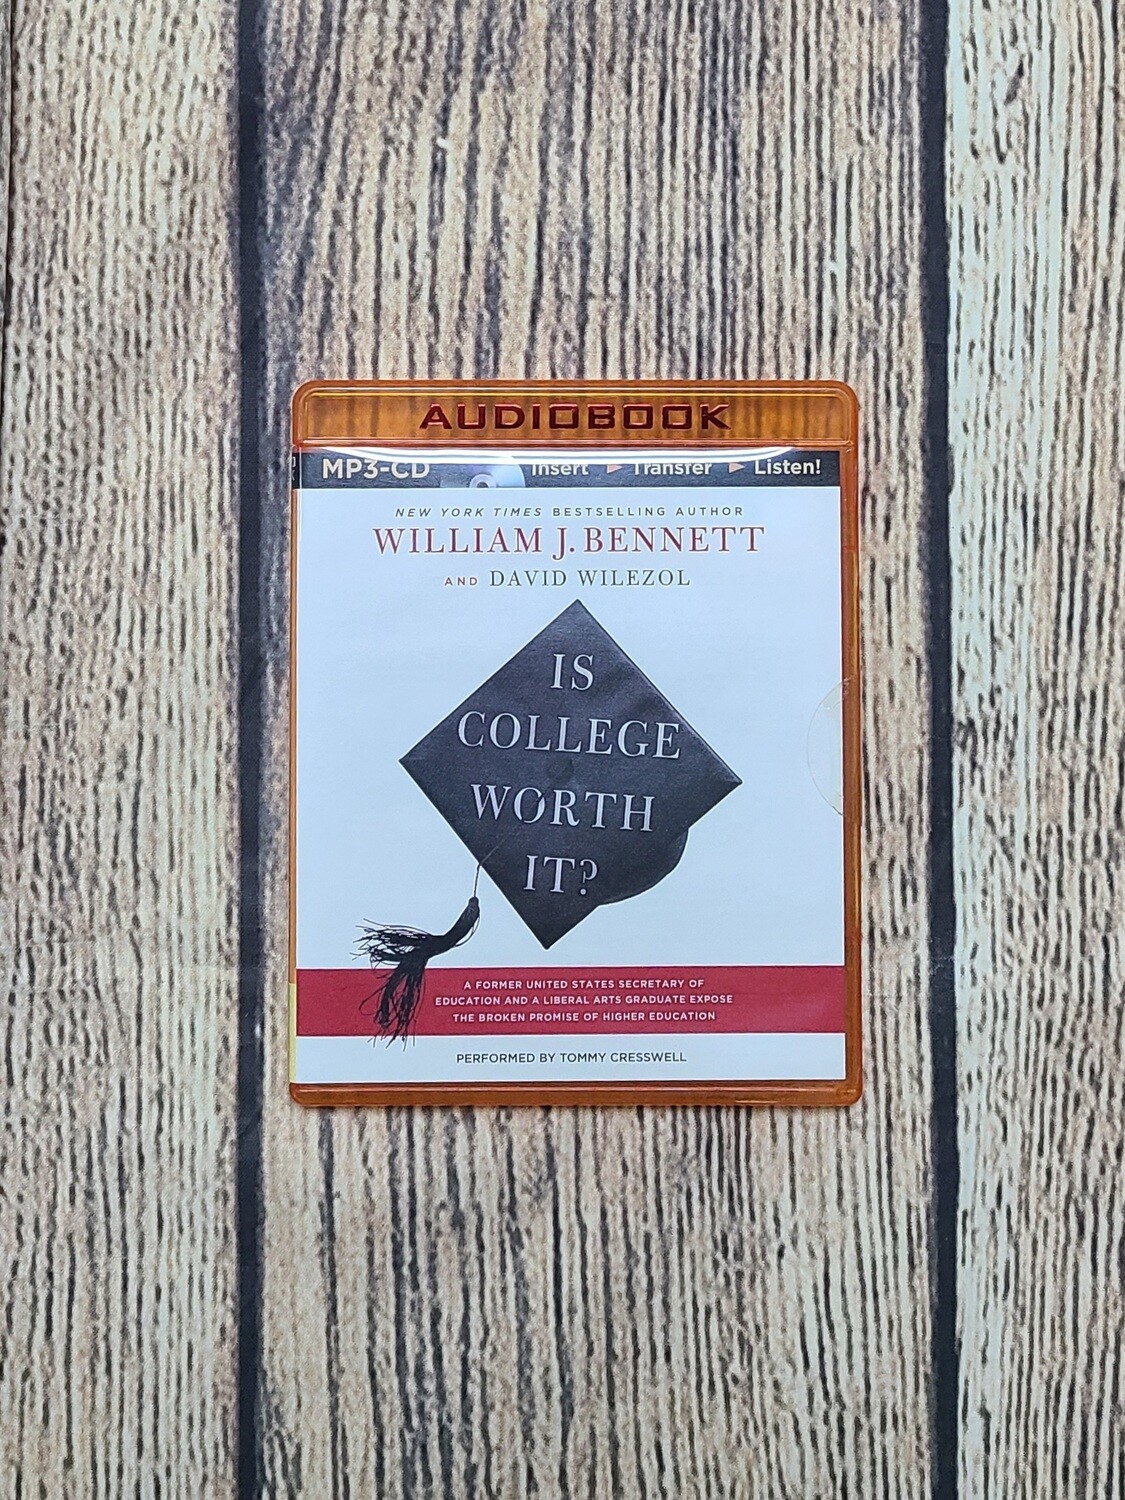 Is College Worth It? by William J. Bennett Audiobook